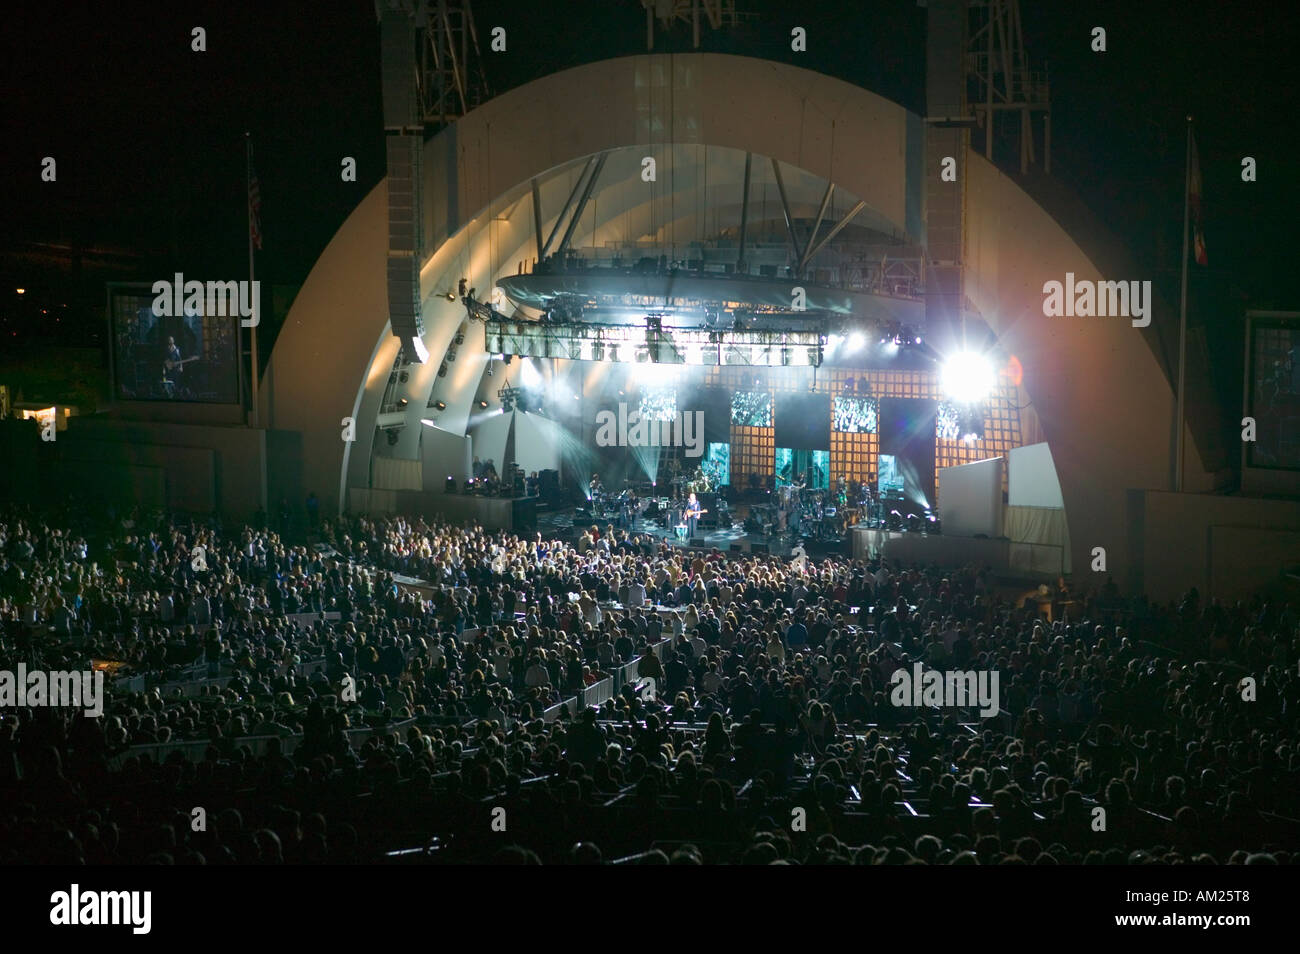 Sting performing at the newly renovated Hollywood Bowl Hollywood